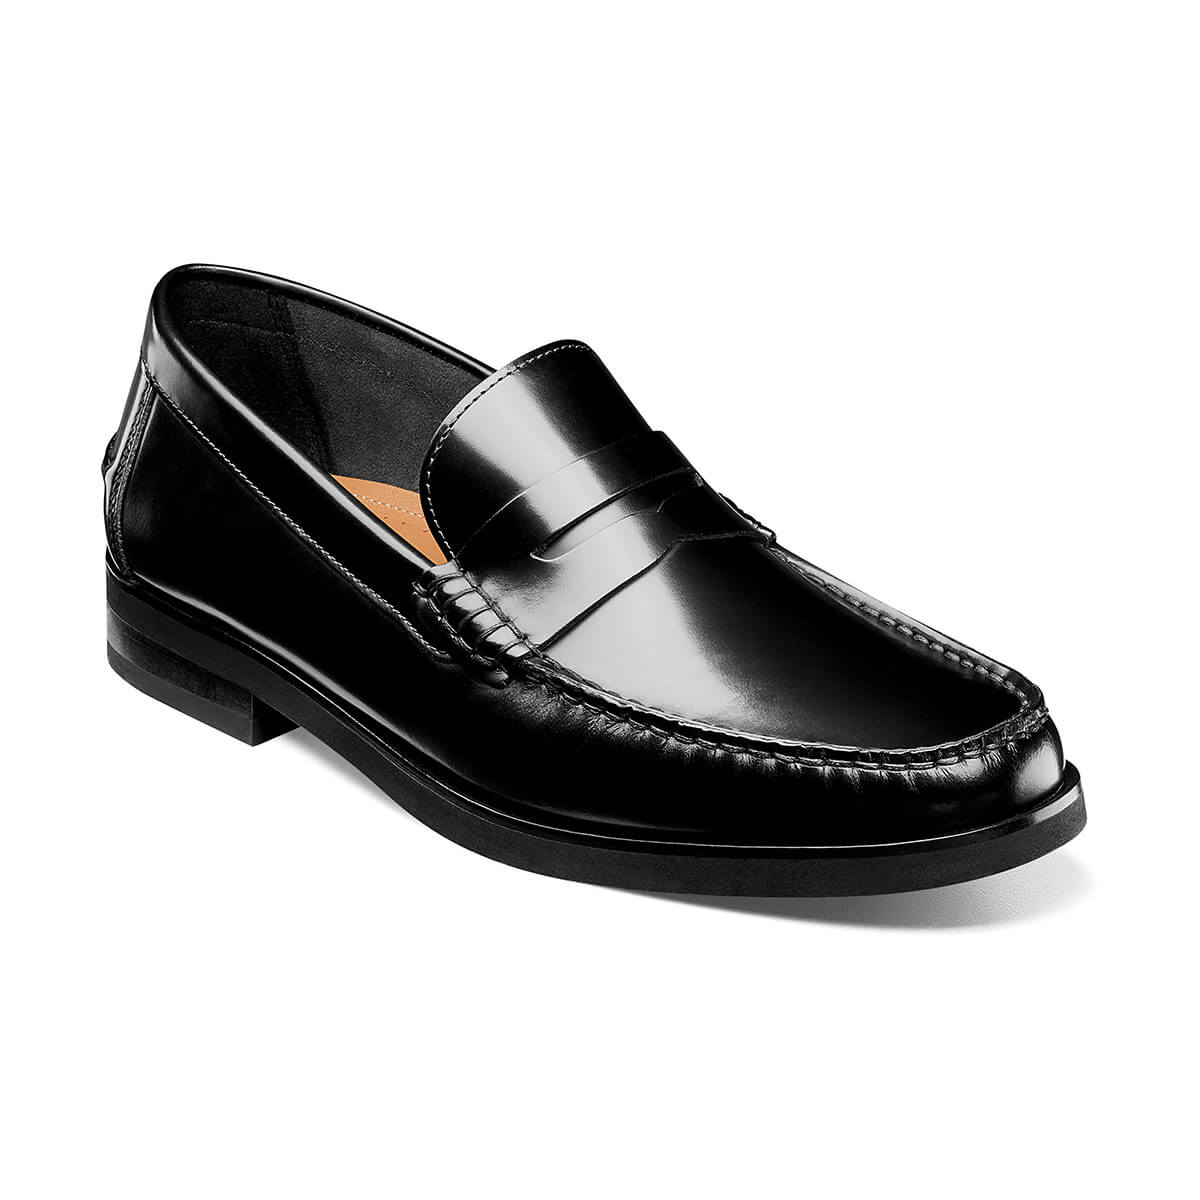 Newest Men’s Shoes | Black FLEX MOC TOE PENNY LOAFER | Florsheim BERKLEY